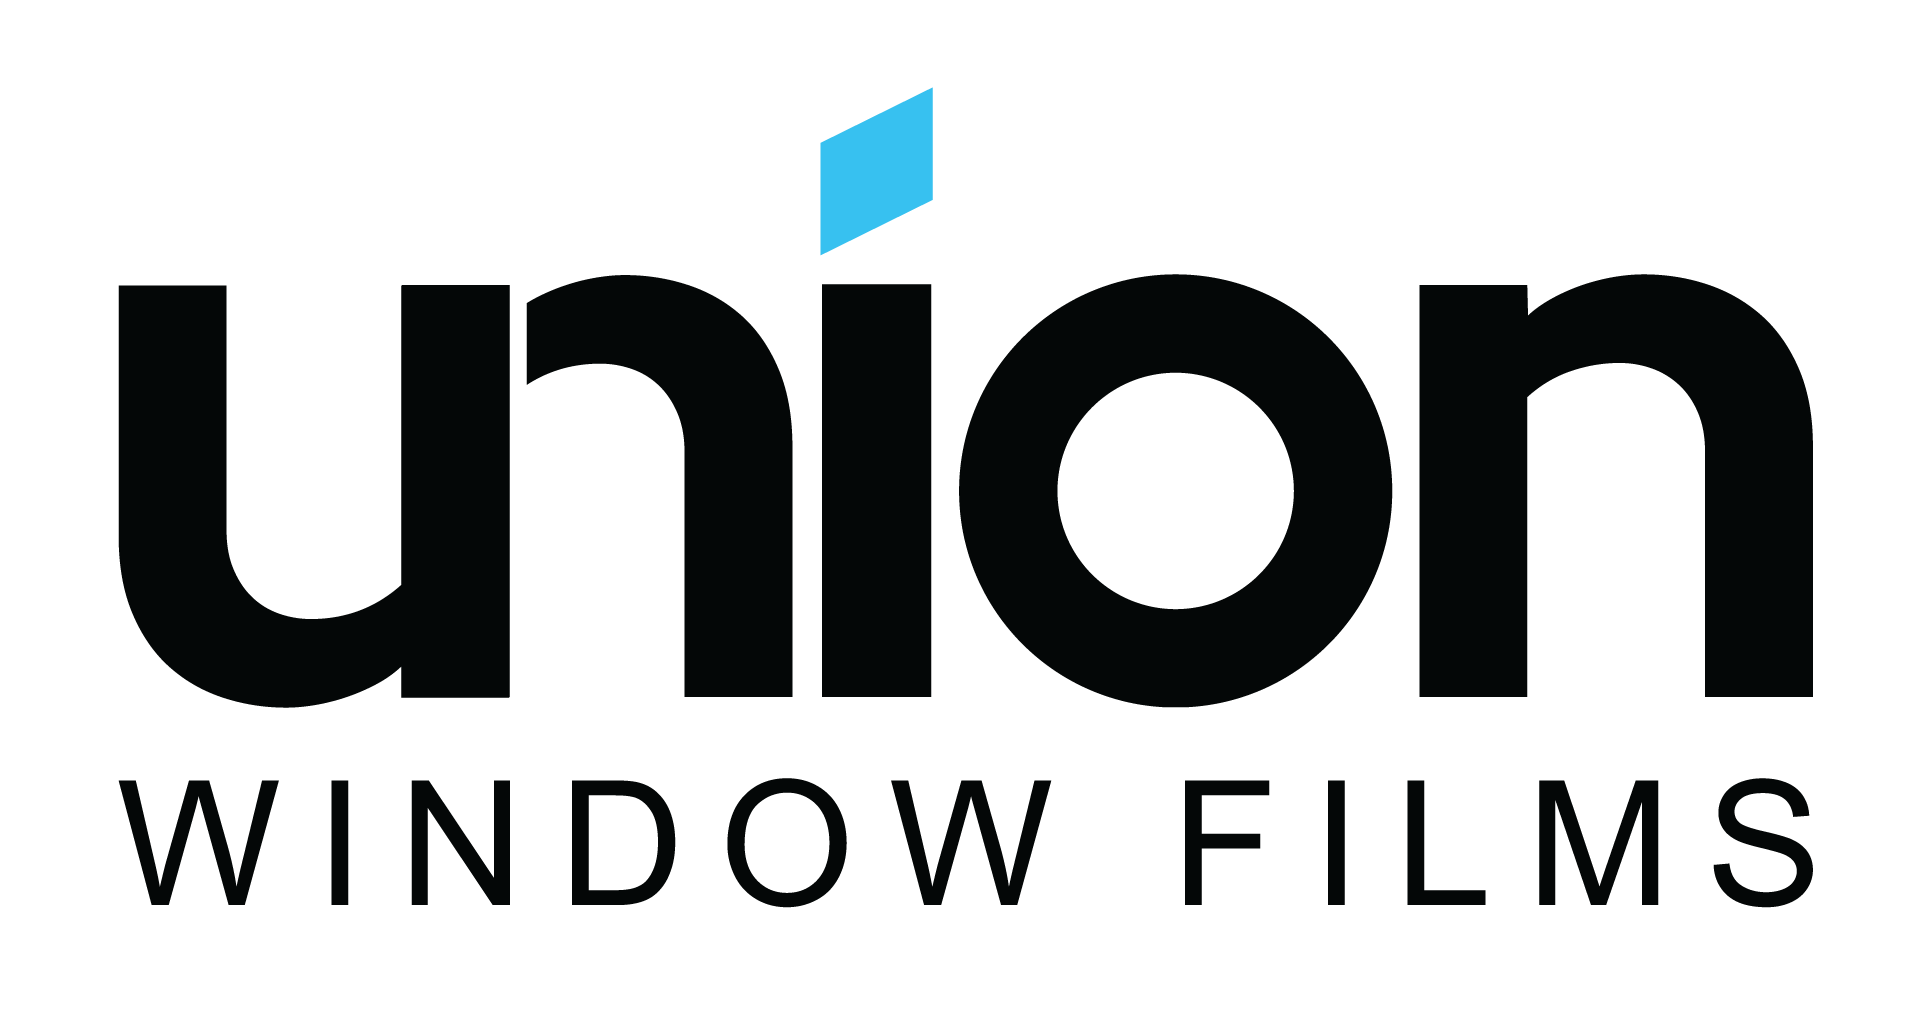 Union window films